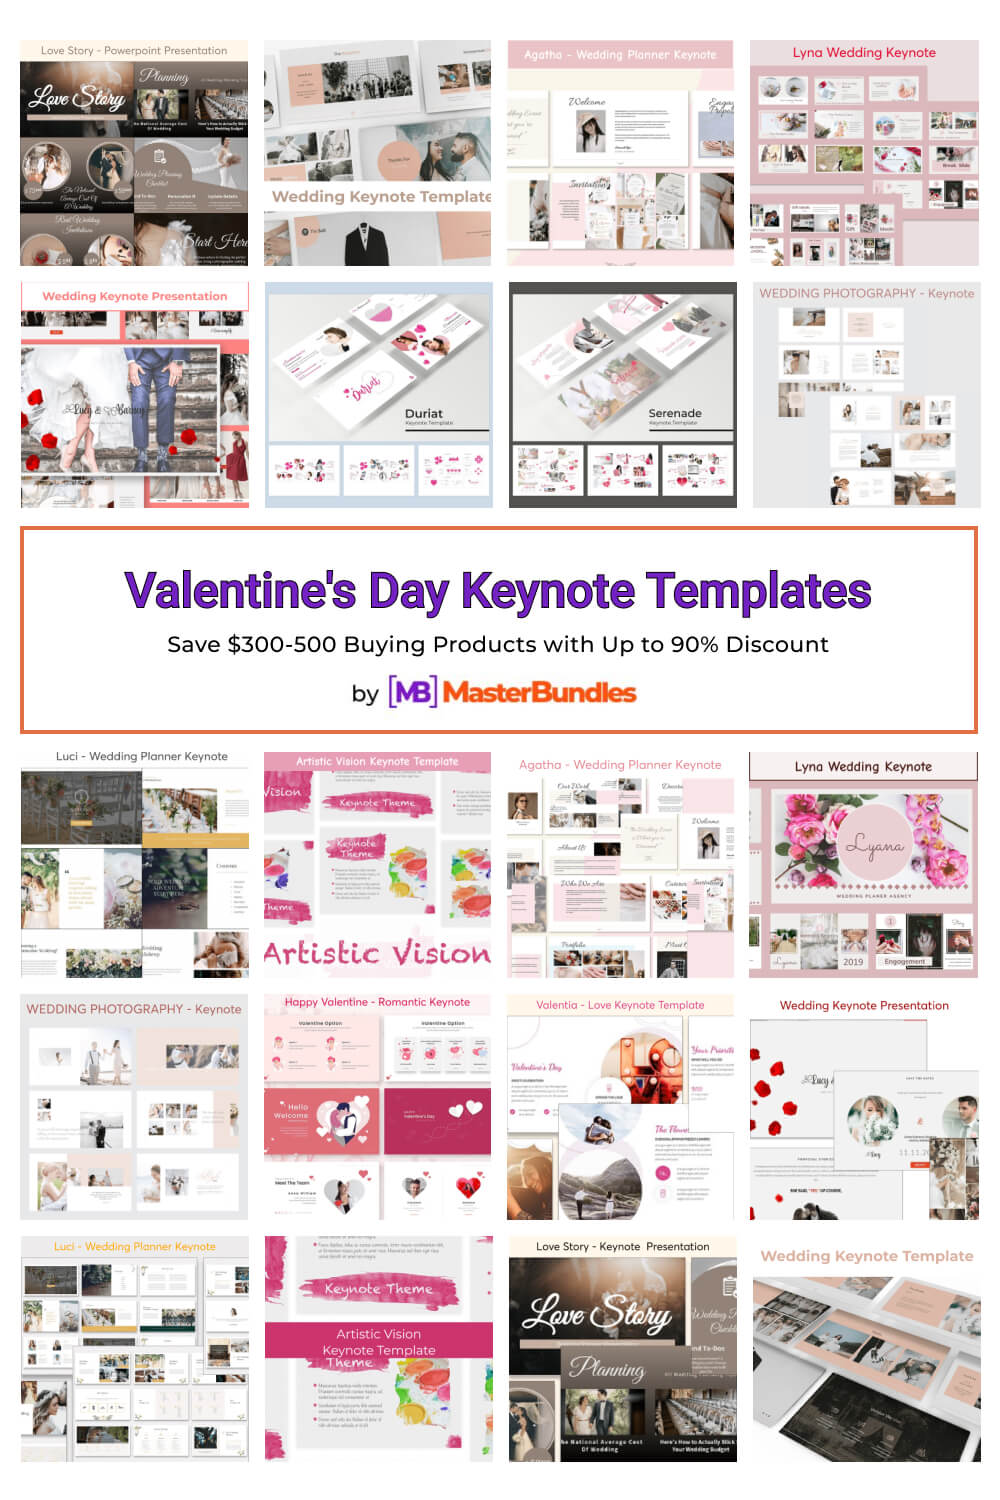 valentines day keynote templates pinterest image.